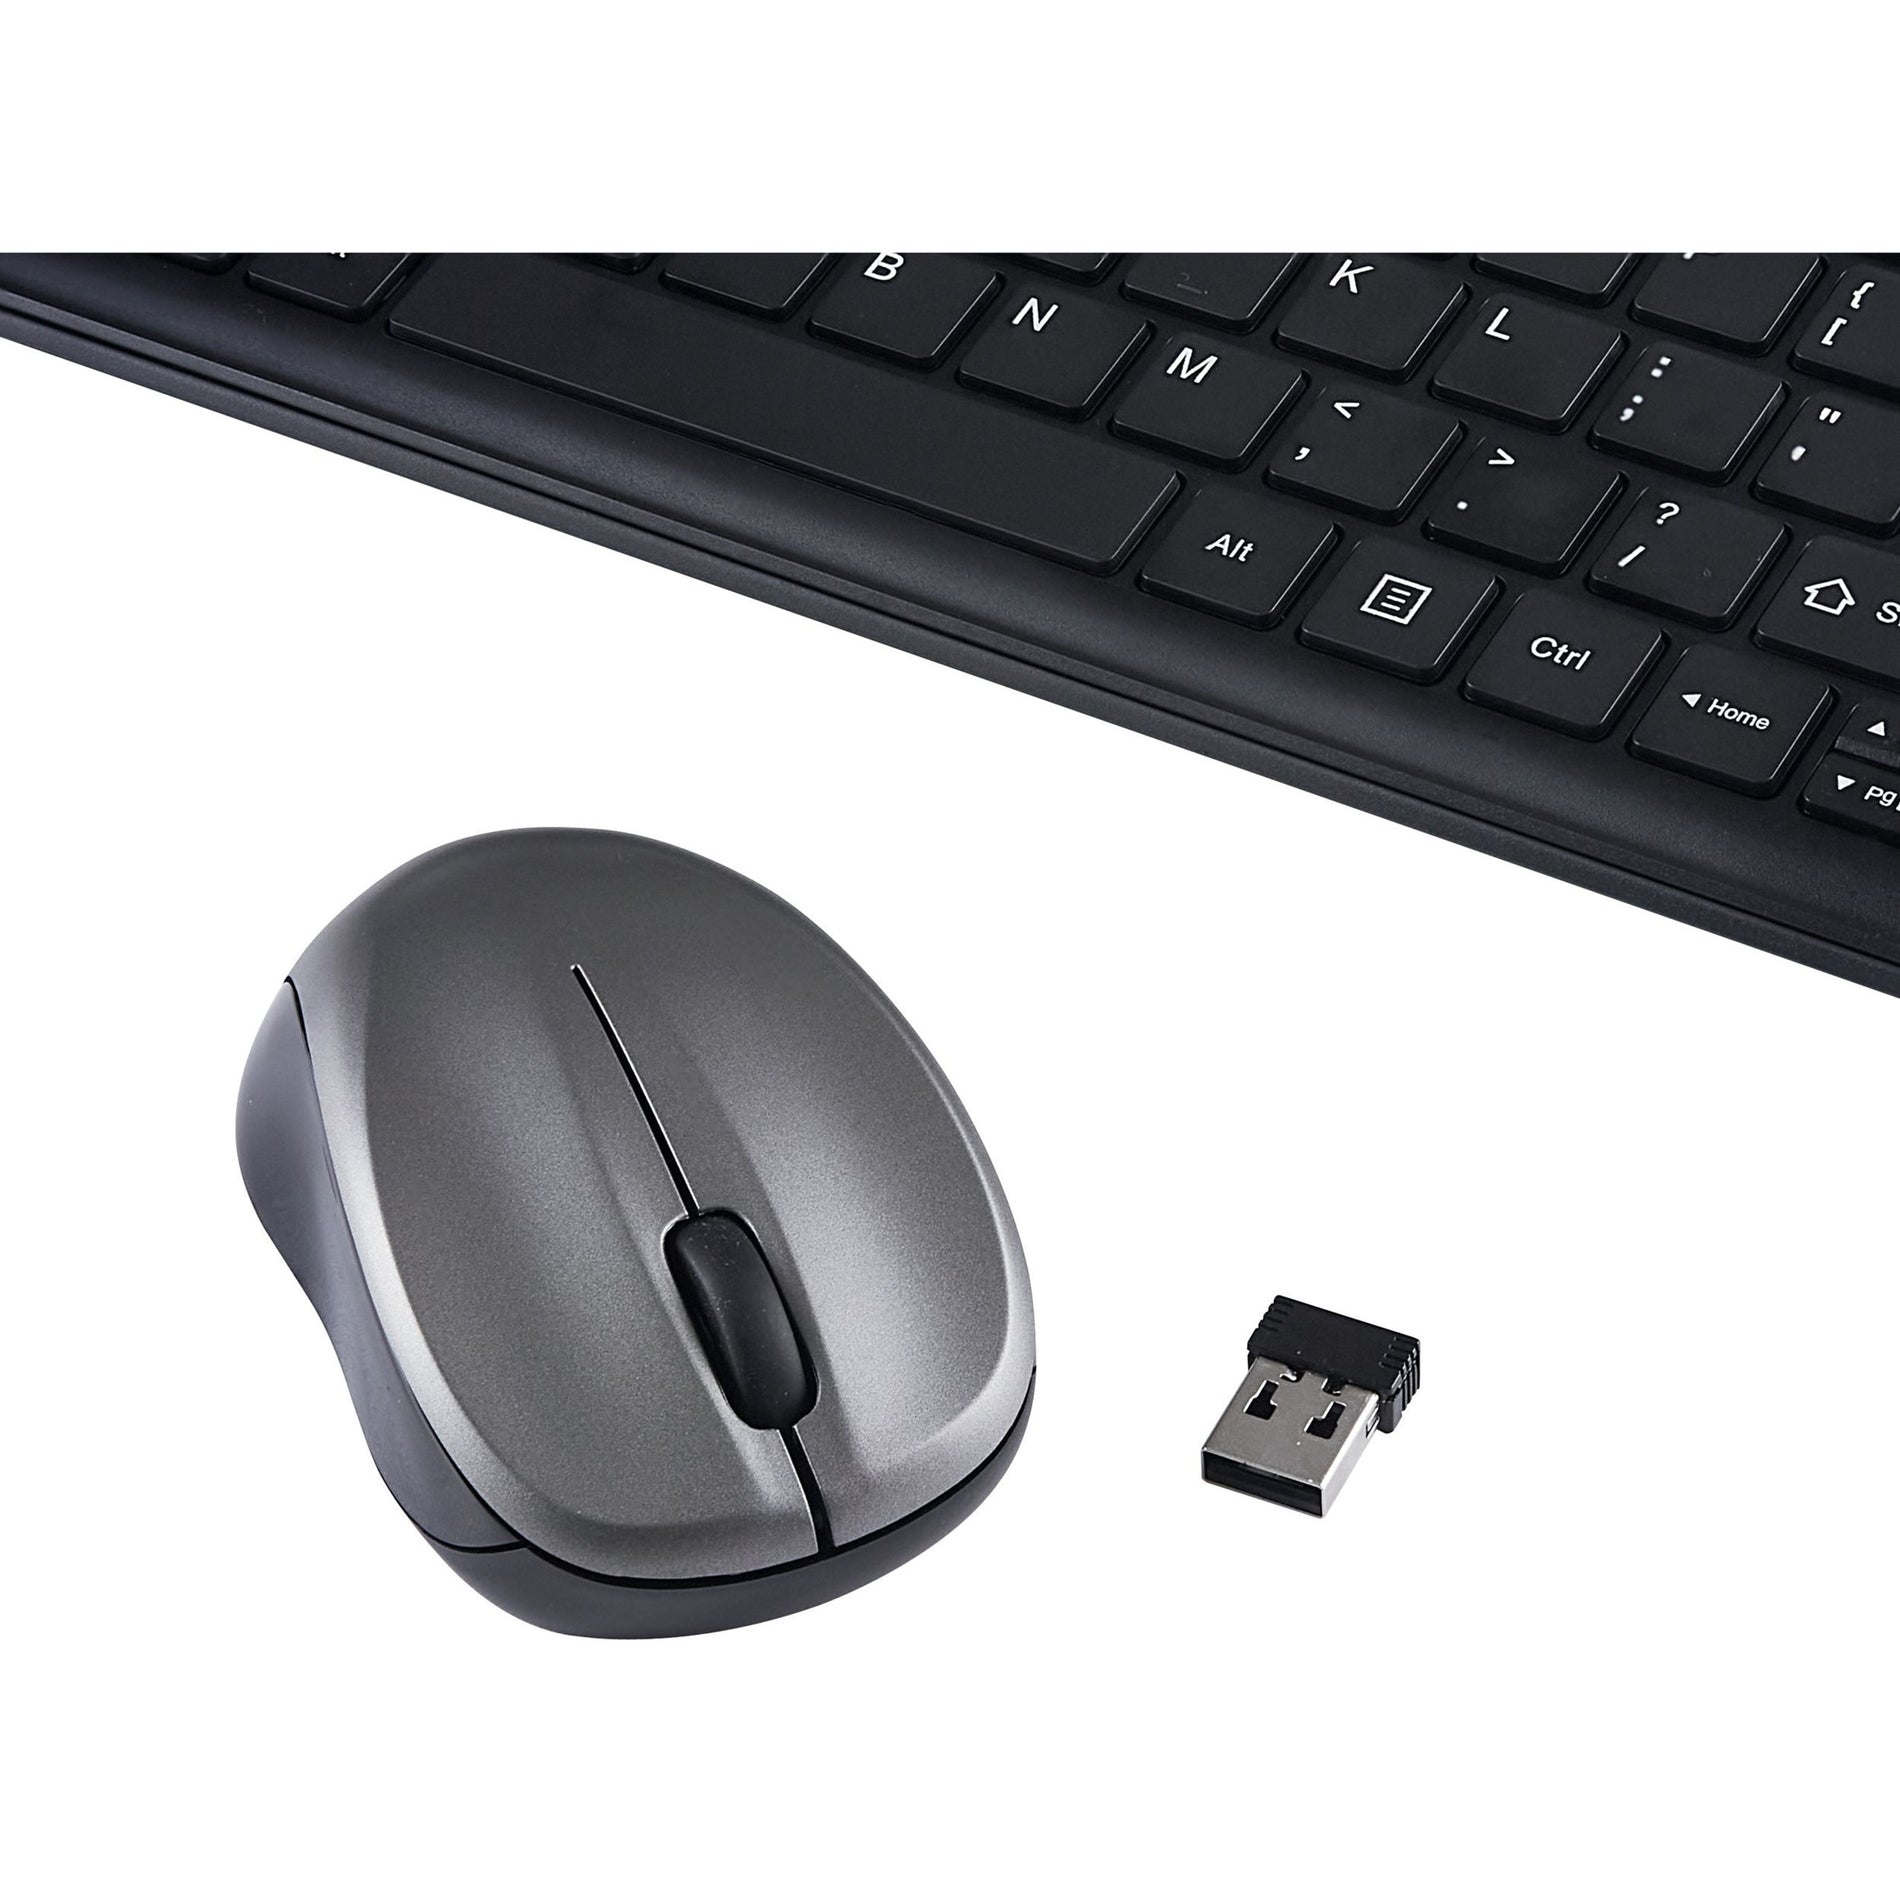 Verbatim 70739 Silent Wireless Compact Keyboard and Mouse, Soft-touch Keys, Low-profile Keys, Adjustable Tilt, Blue LED, 1600 dpi